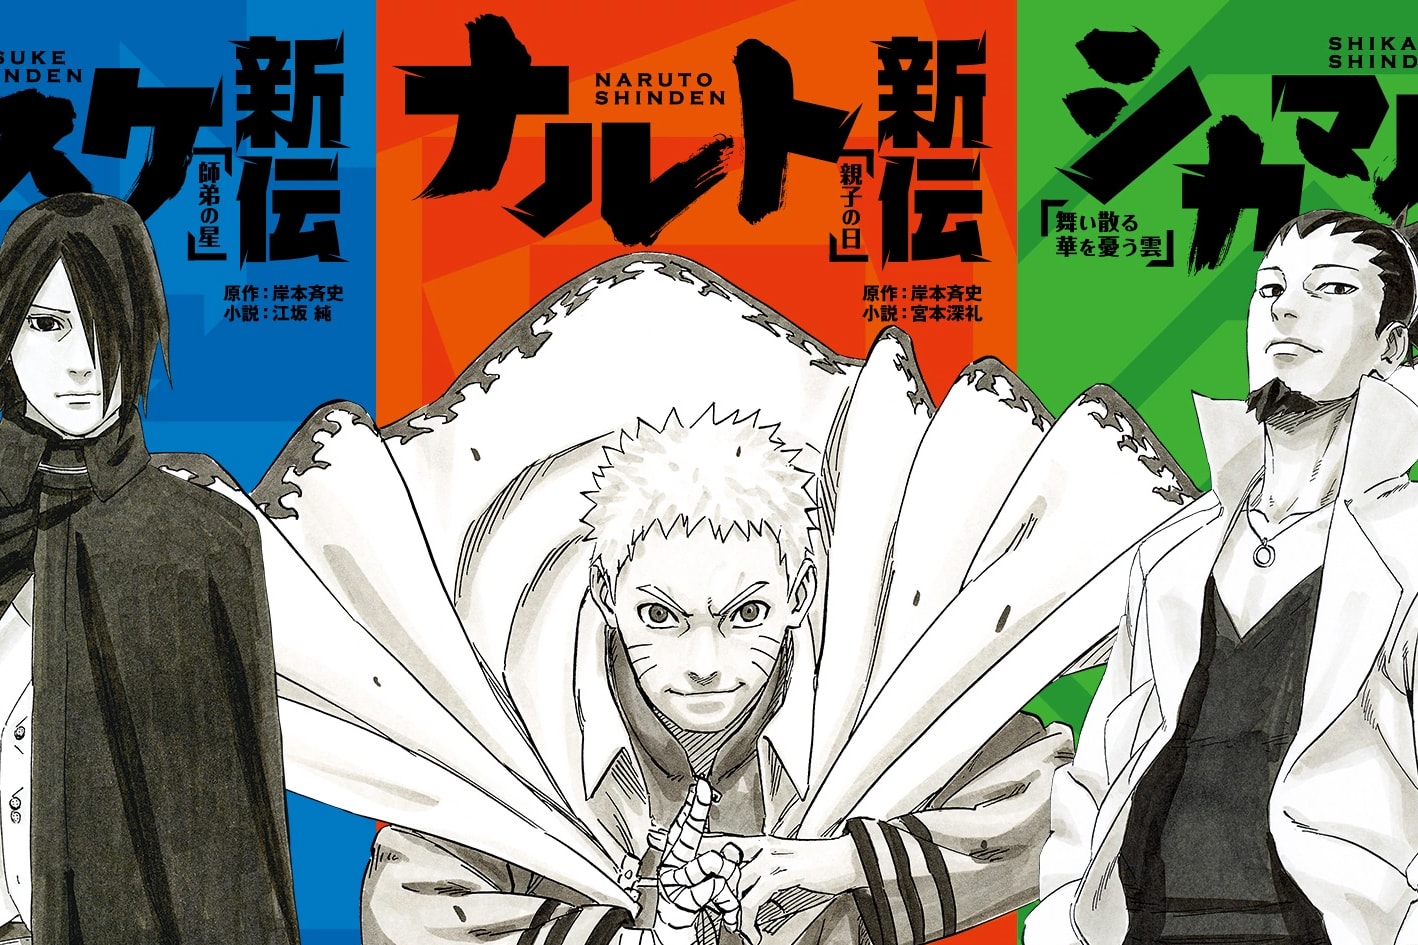 Boruto: Naruto Next Generations (a Titles & Air Dates Guide)